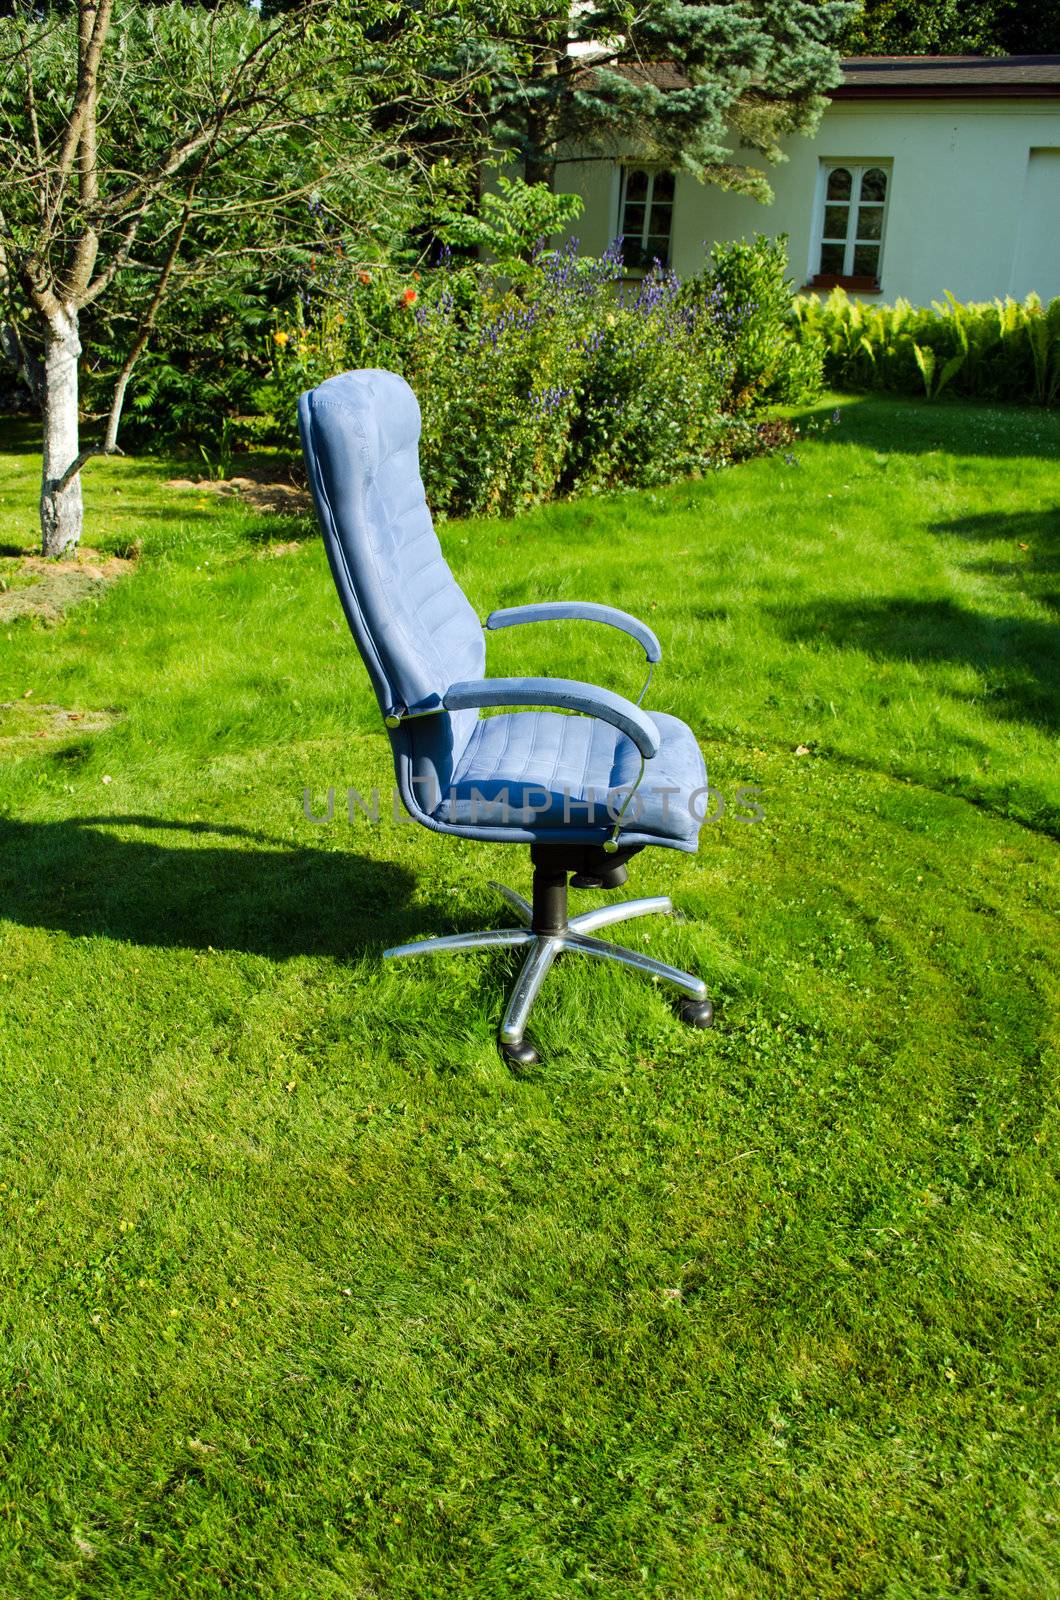 Boss chief office chair in garden lawn grass cut by sauletas